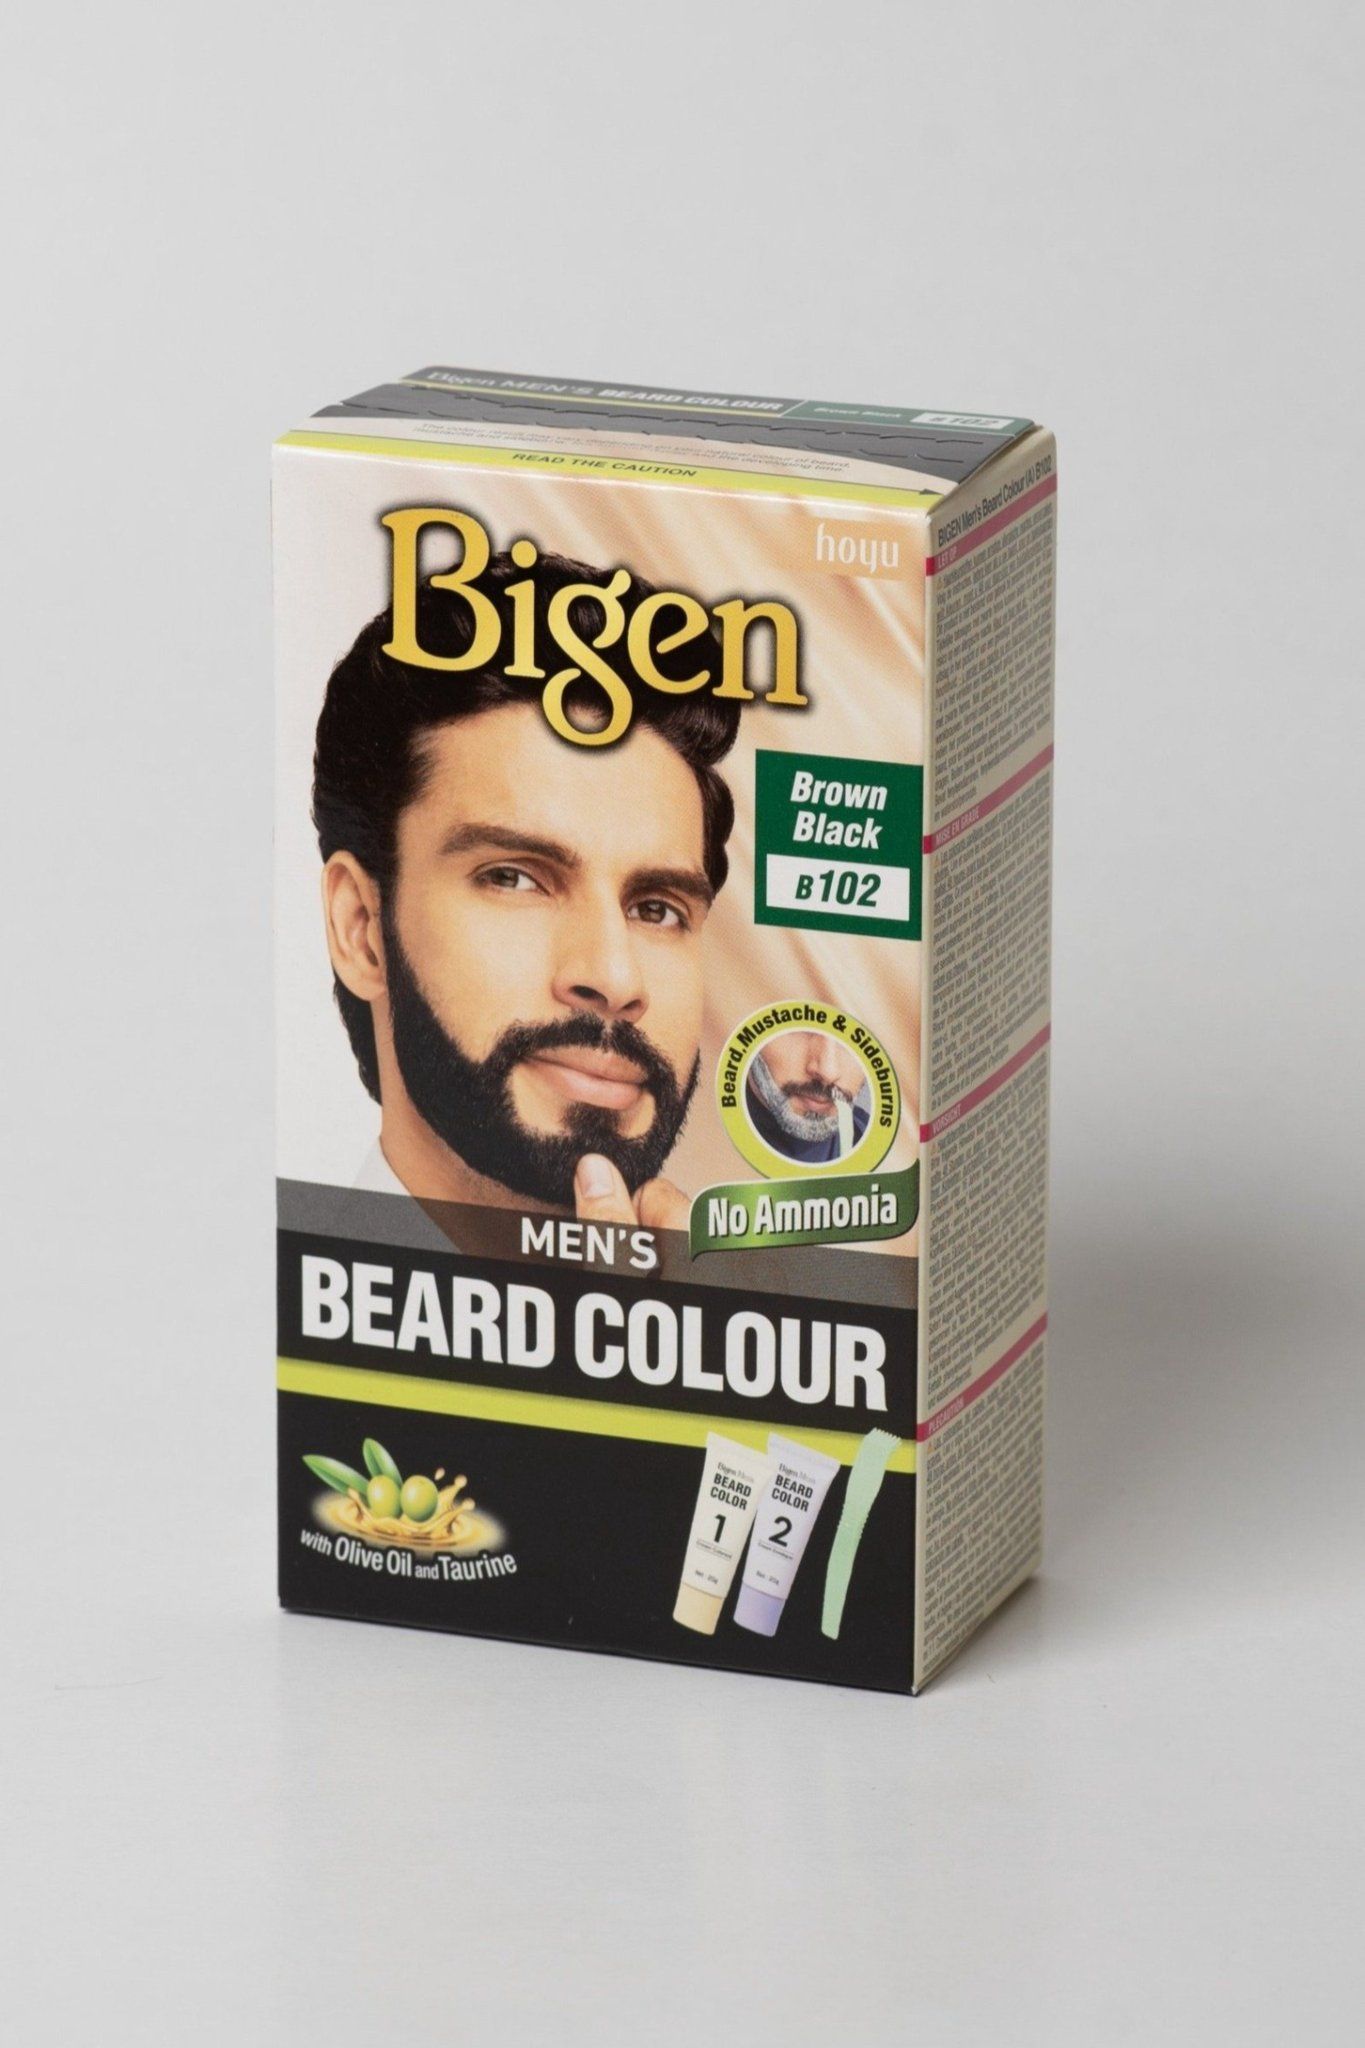 Bigen Men's Beard Colour - Brown Black B102